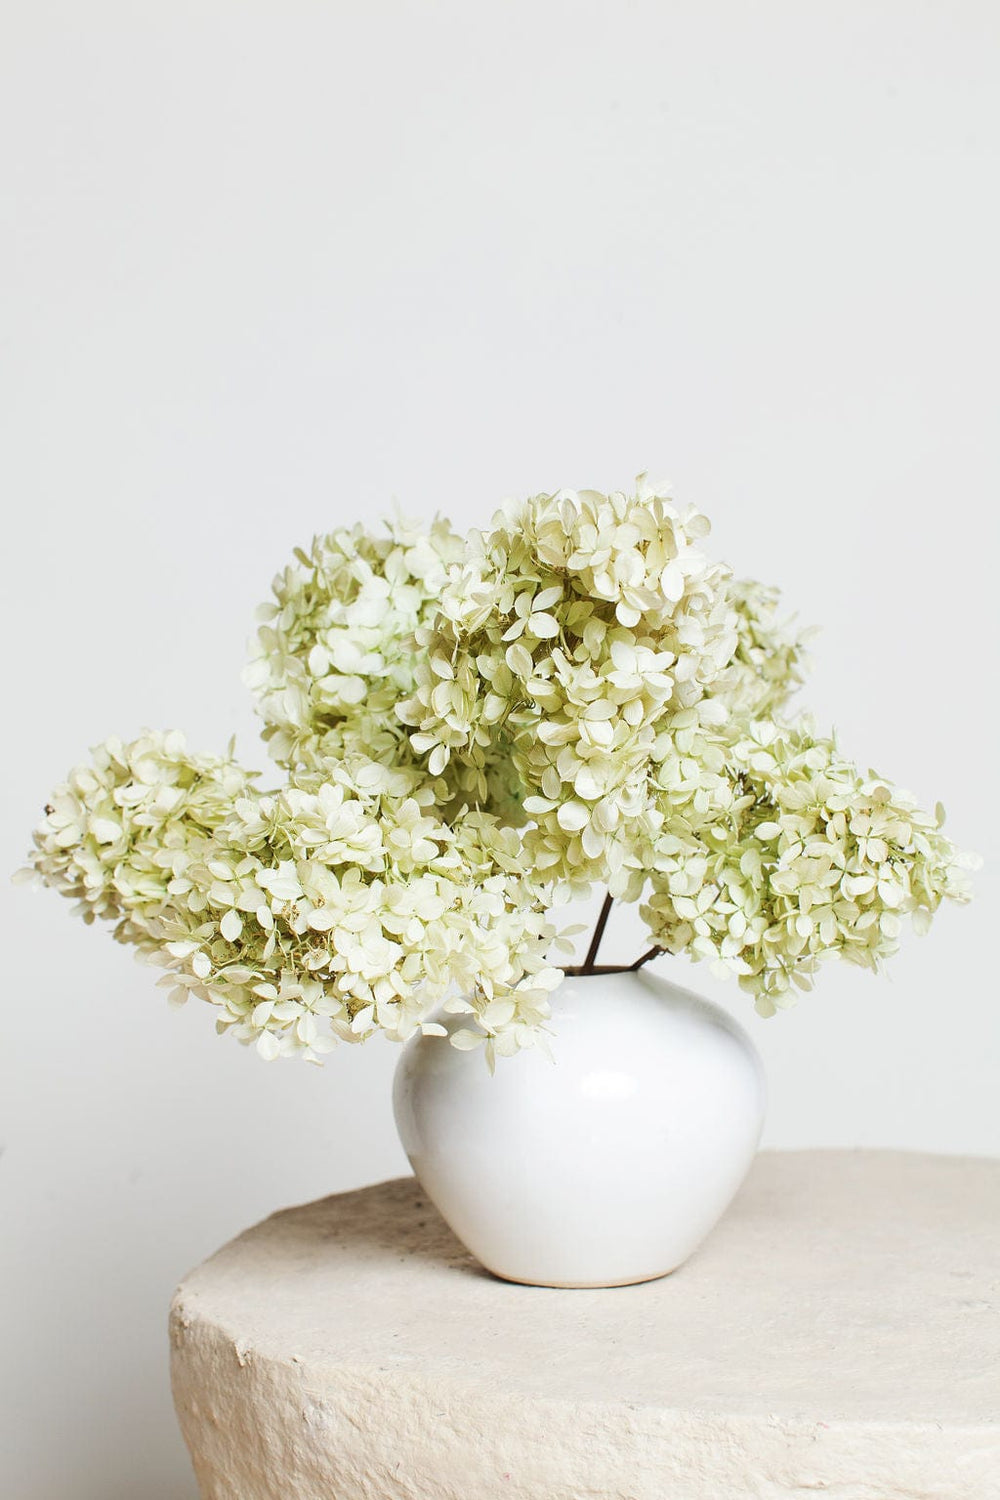 Idlewild Floral Co. Bunches Green Peegee Hydrangea